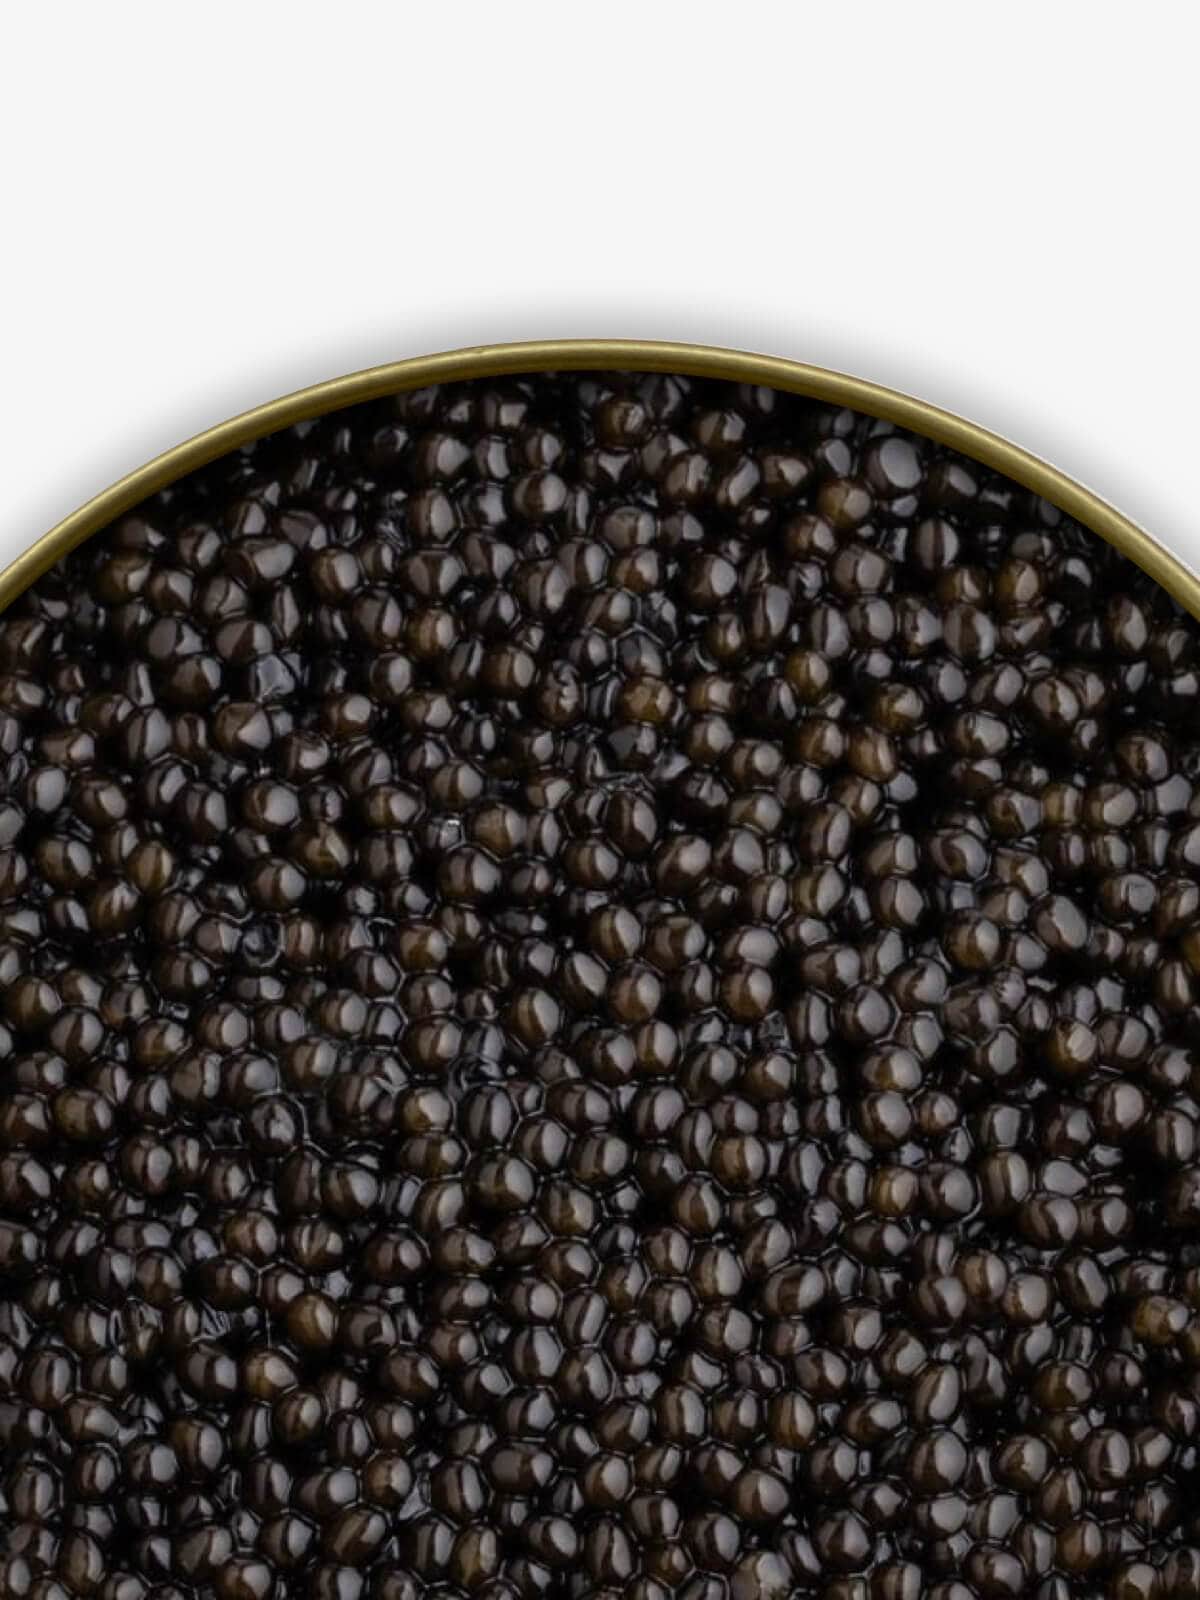 "Russian Czar" Beluga Sturgeon Caviar - Caviar Skazka